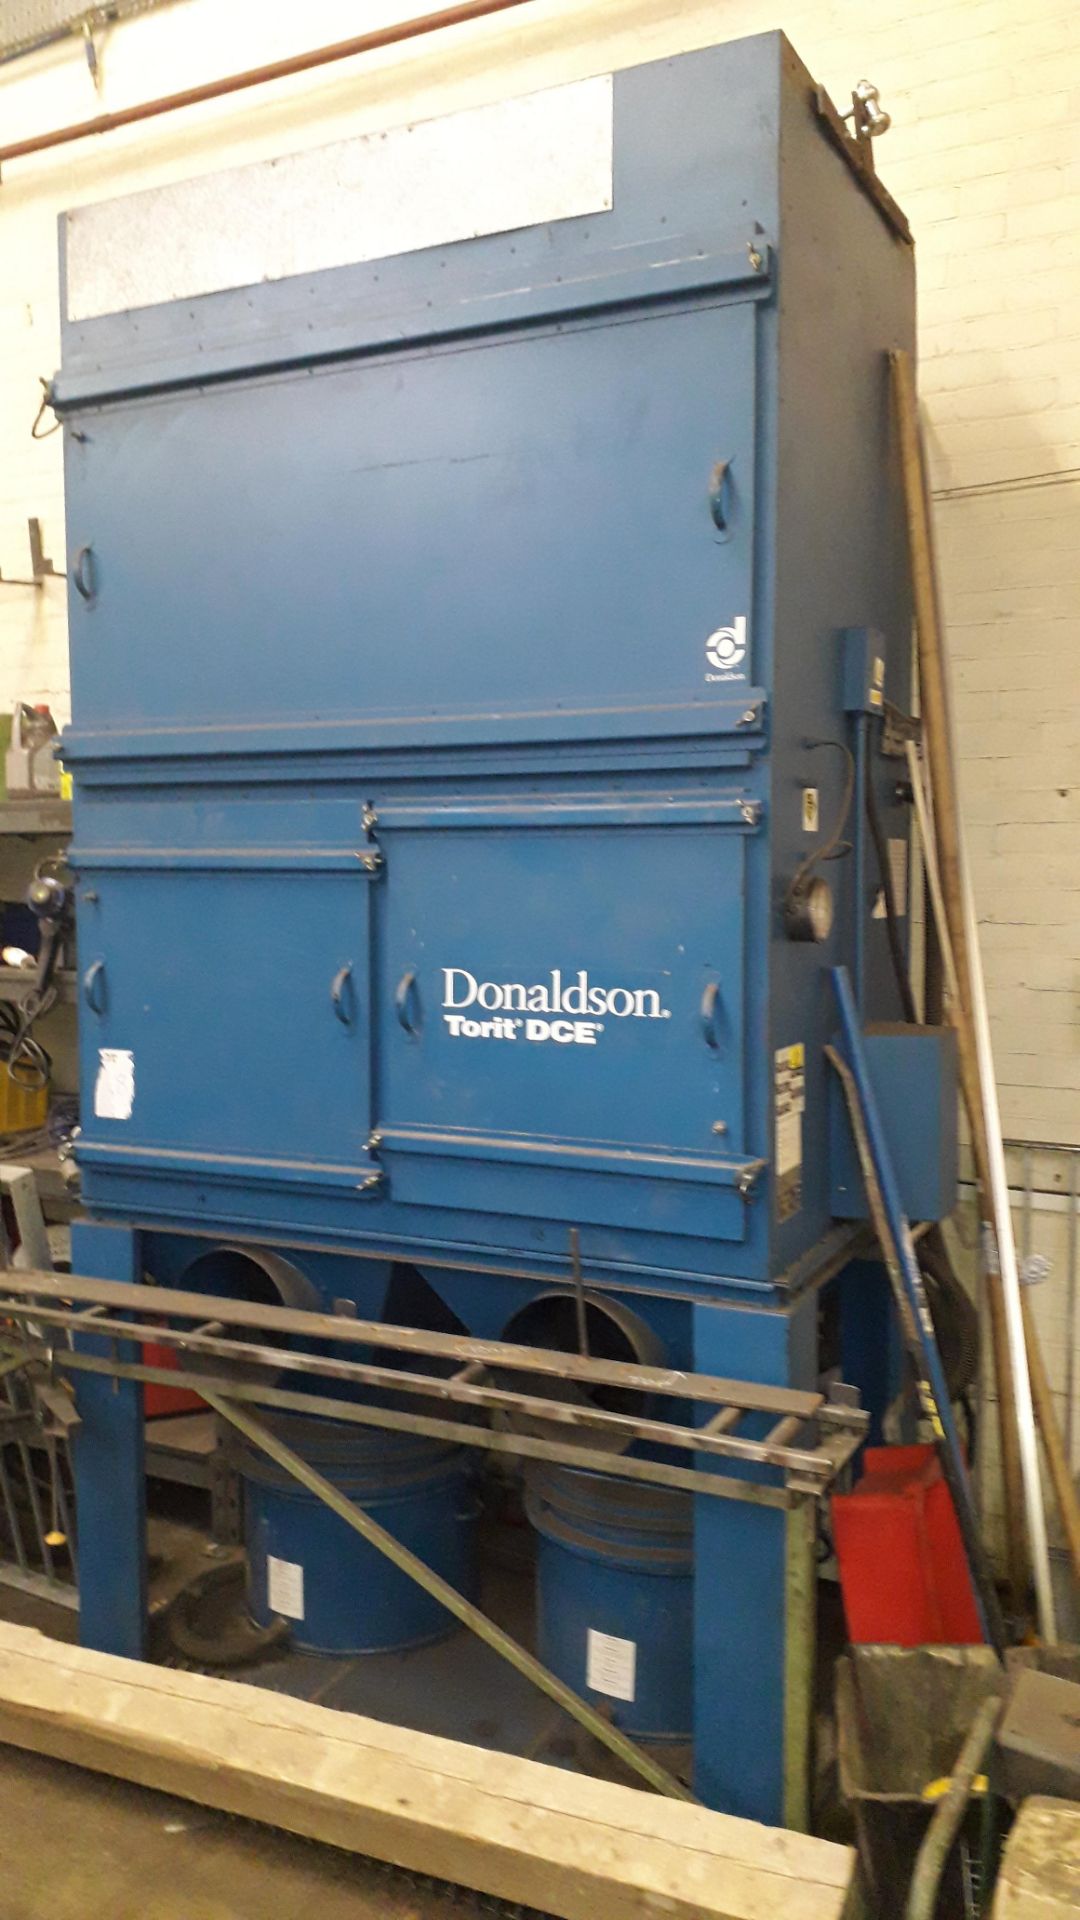 Donaldson Torit DCE UMA456K11 Dust Extraction Unit (2008) Serial Number 00034563 - 400v Approx 600kg